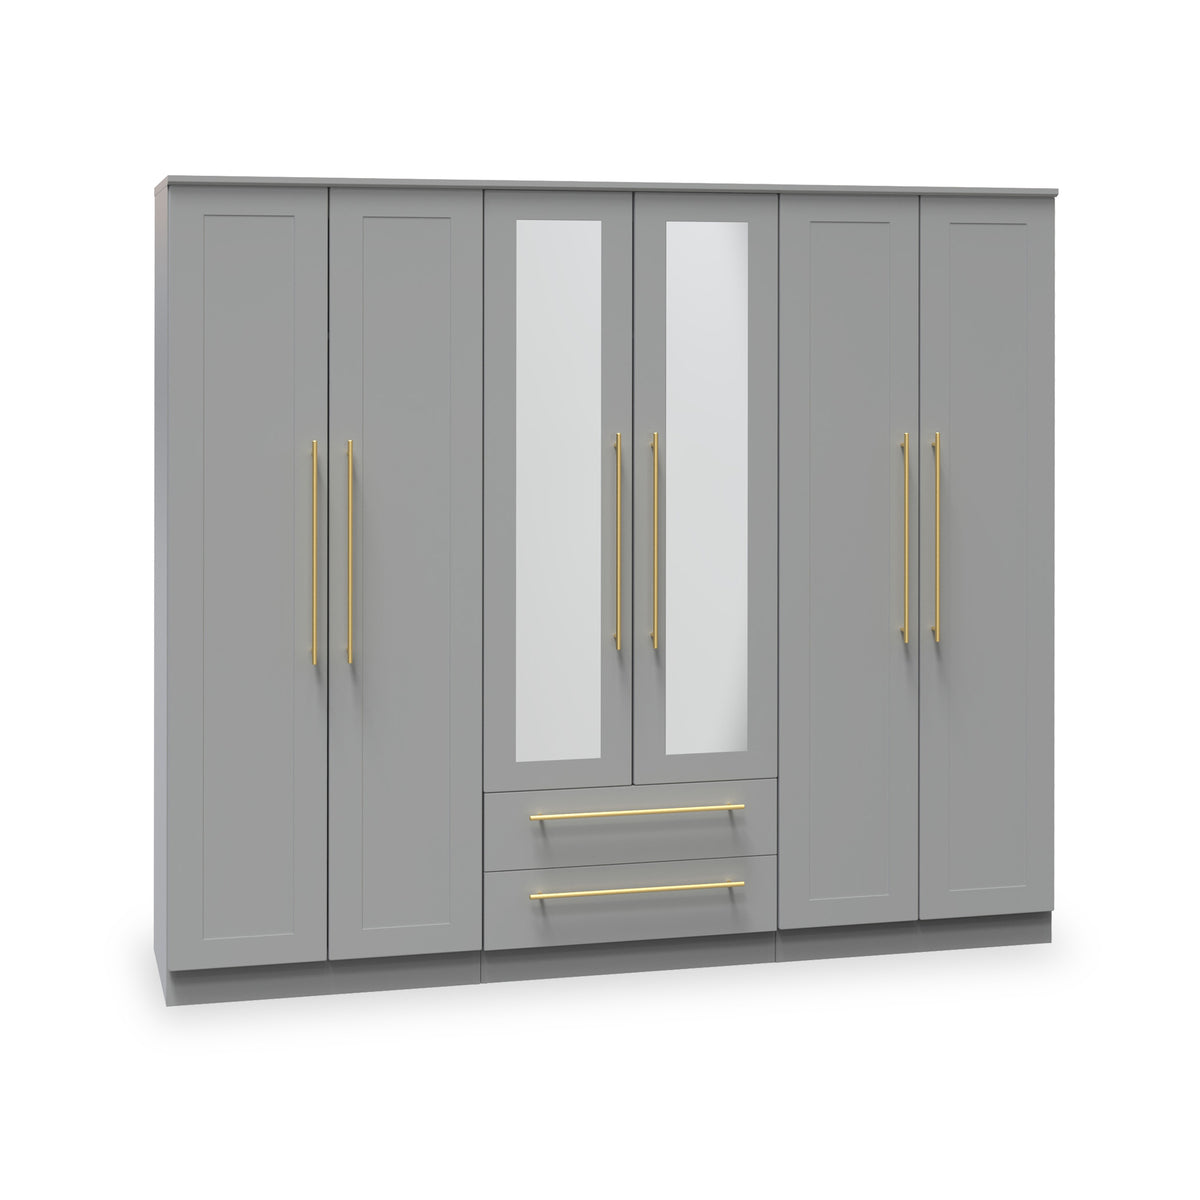 Bramham Grey Tall 6 Door 2 Mirror Wardrobe from Roseland furniture